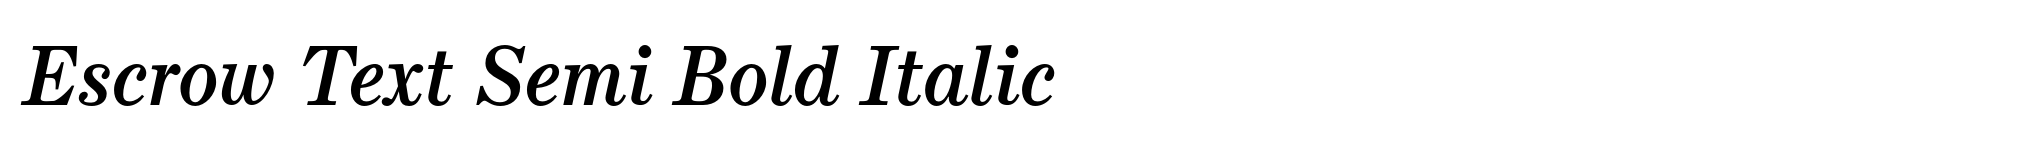 Escrow Text Semi Bold Italic image